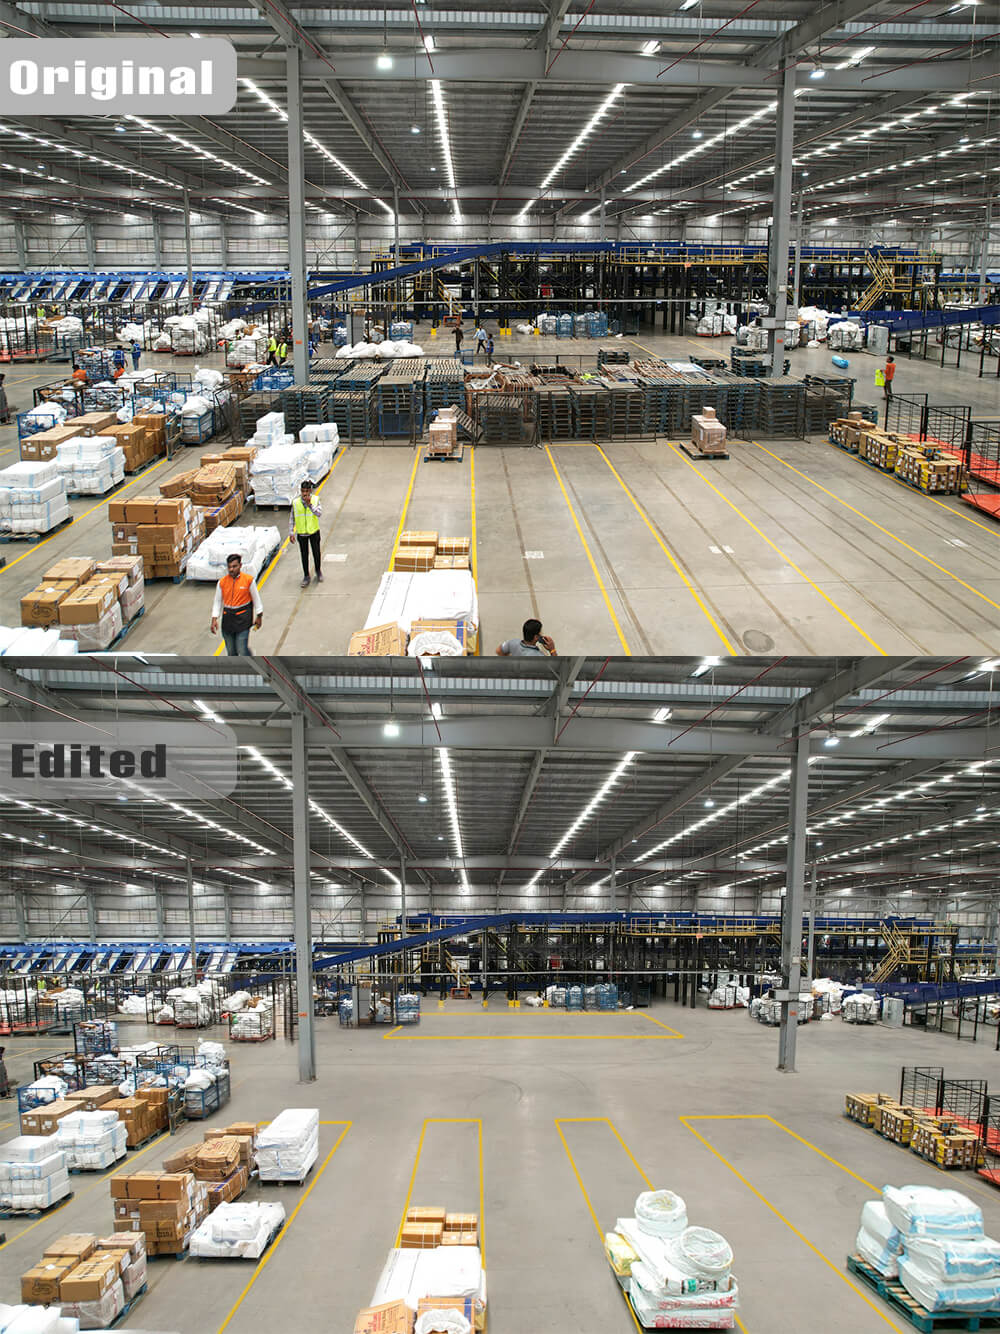 Warehouse photo-realistic editing